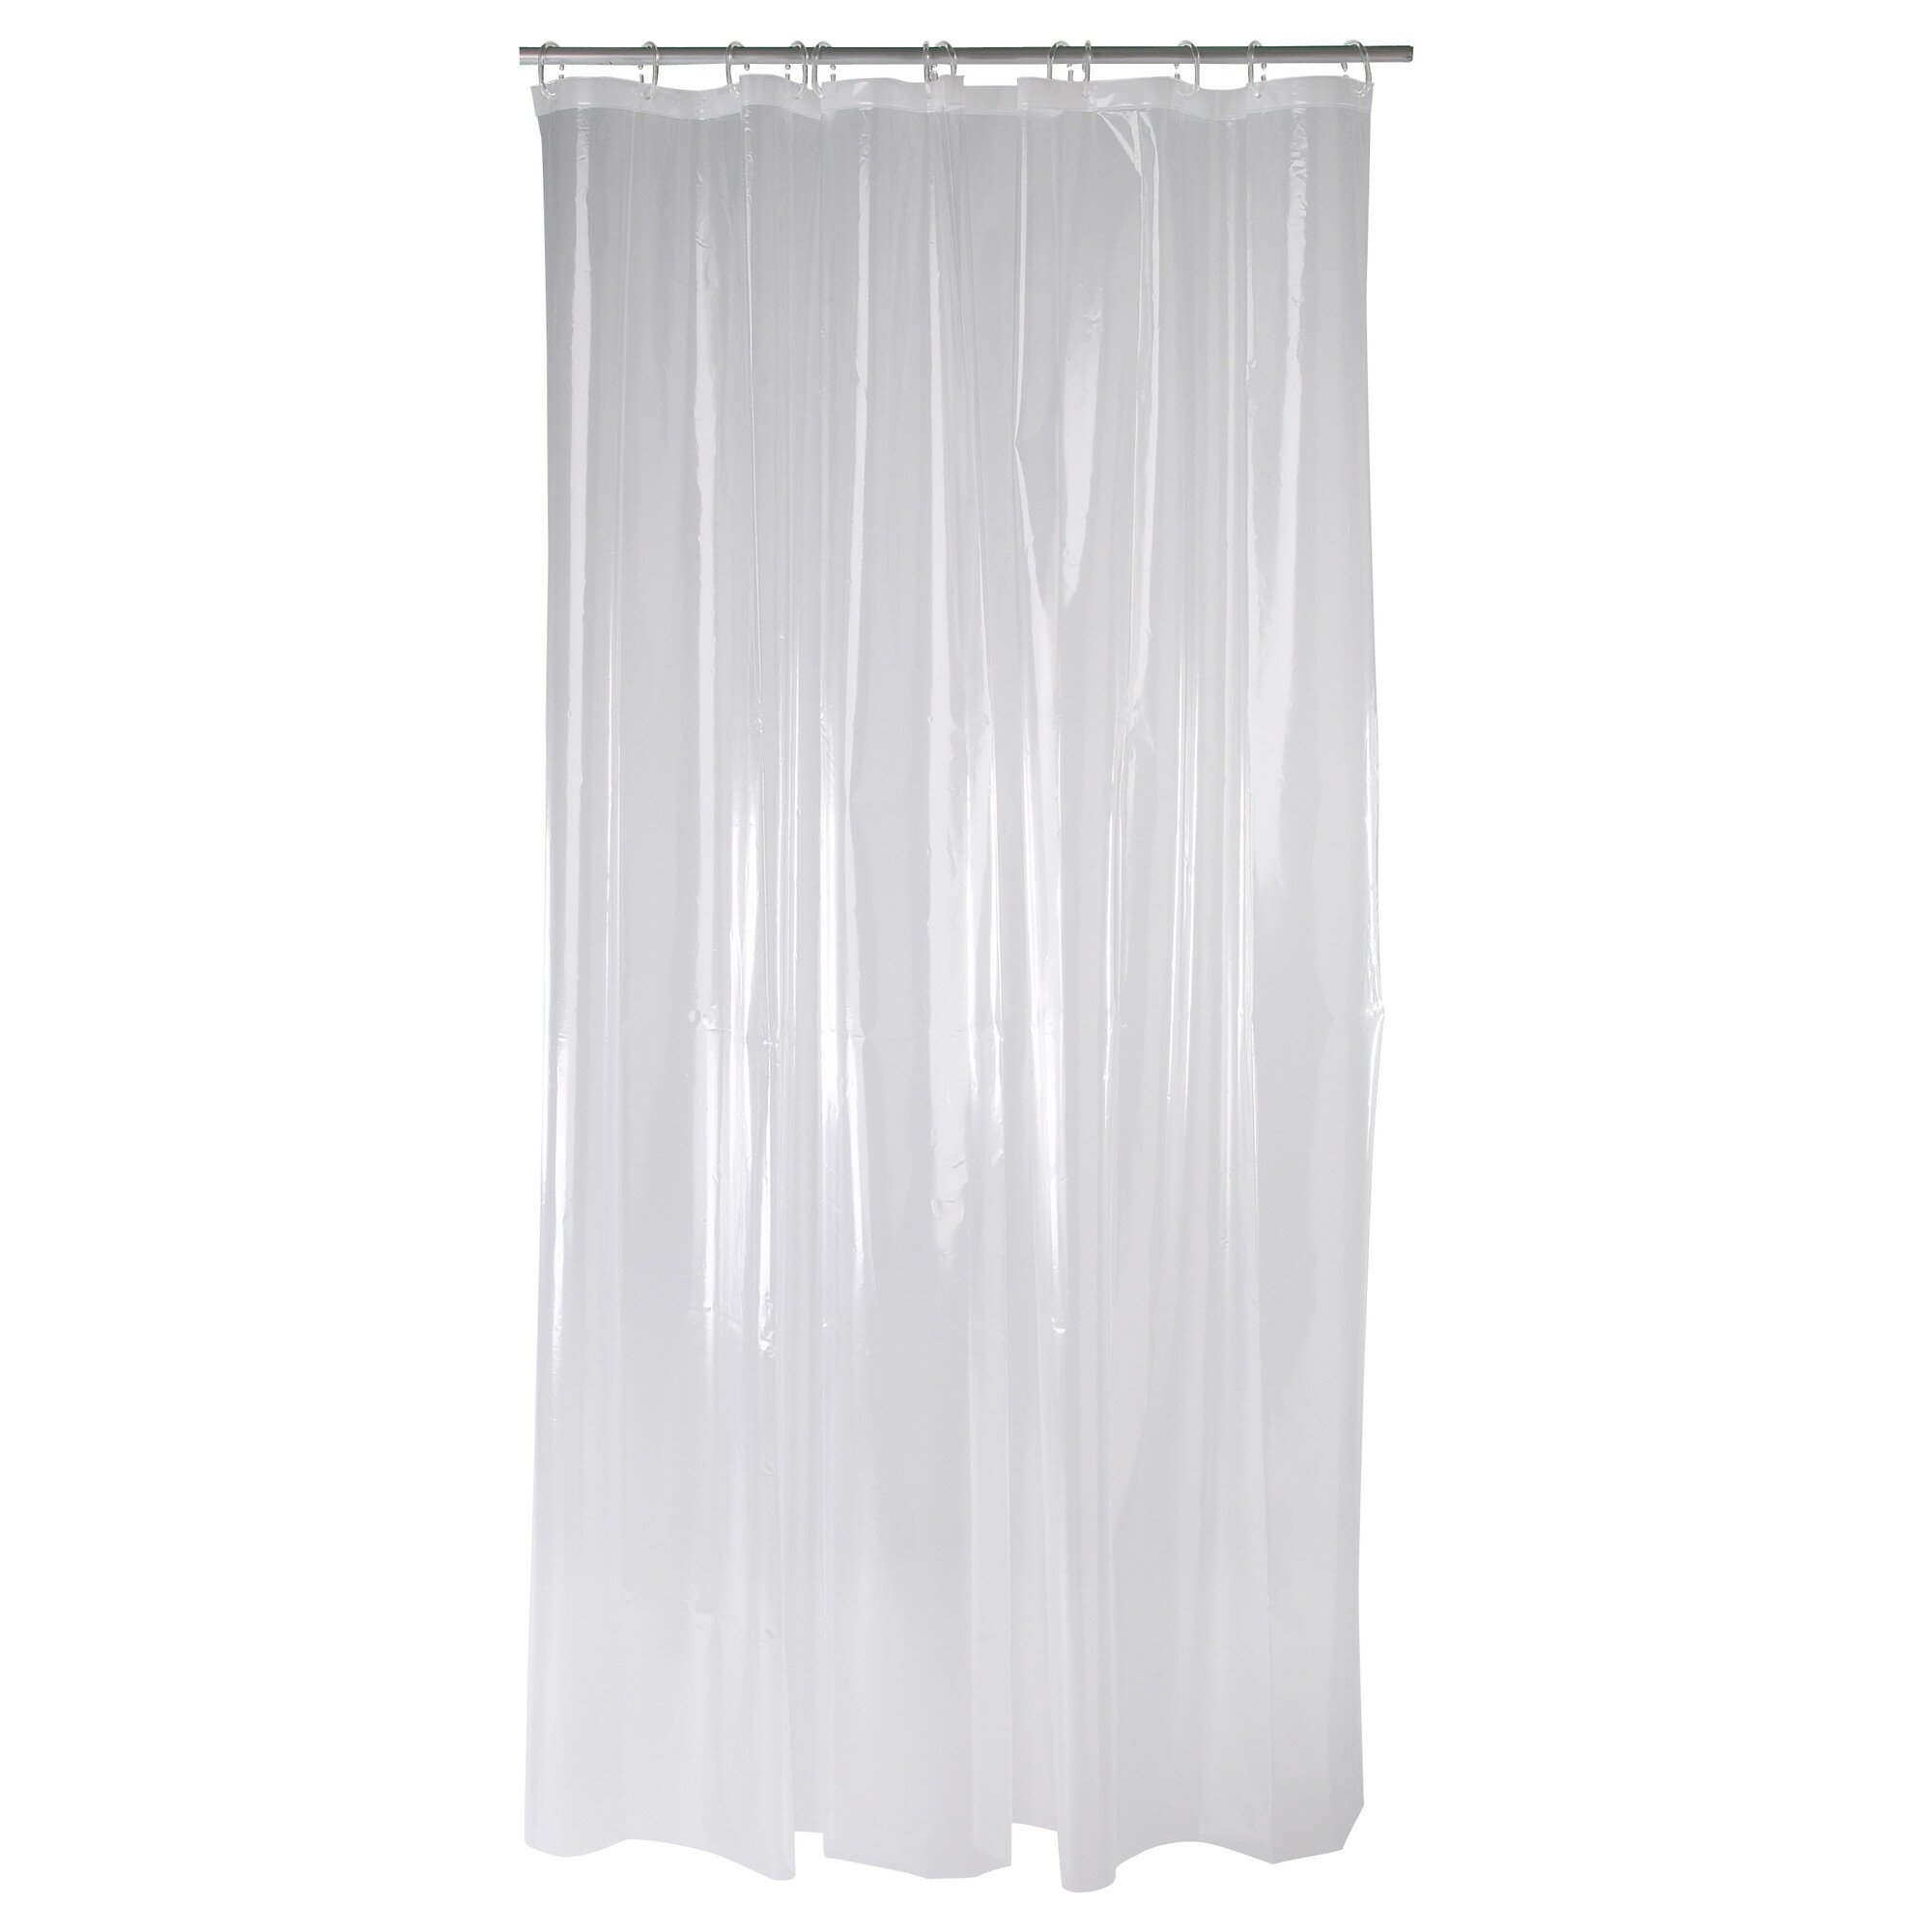 Ikea Shower Curtain for Best Your Bathroom Decoration: Frosted Shower Curtain | Bathroom Curtain Rods | Ikea Shower Curtain